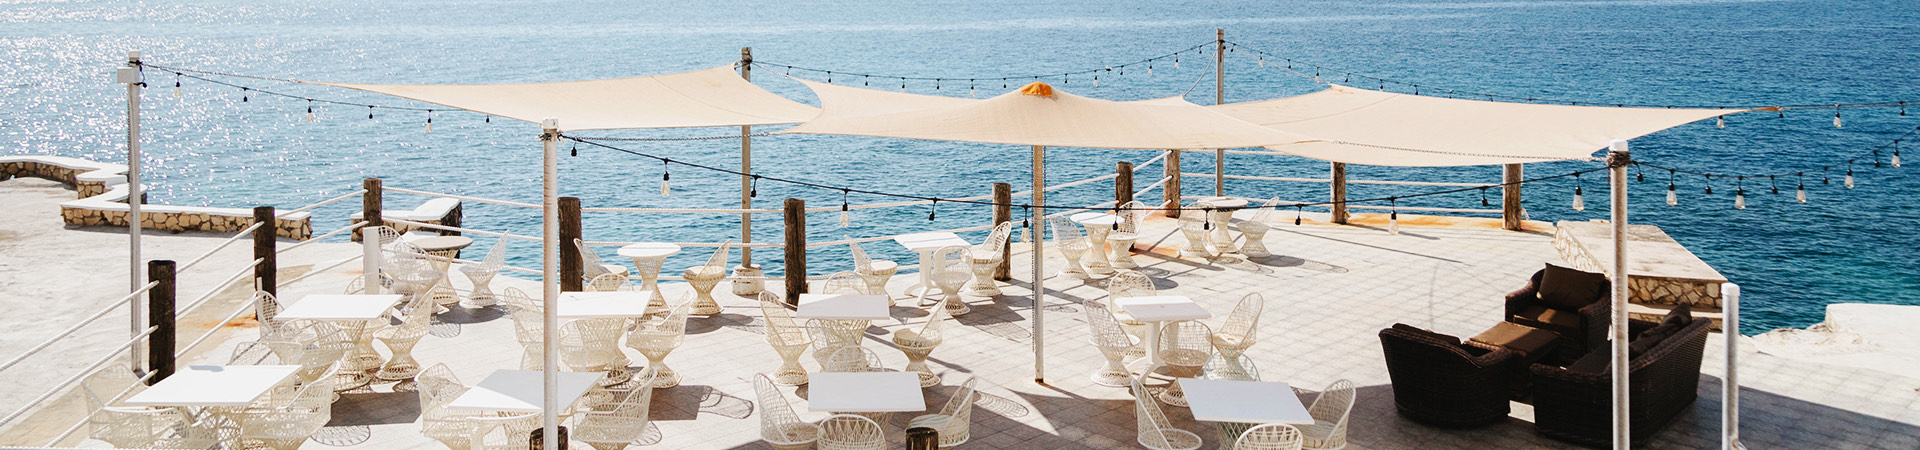 white umbrella covered ocean side seating area of restaurant